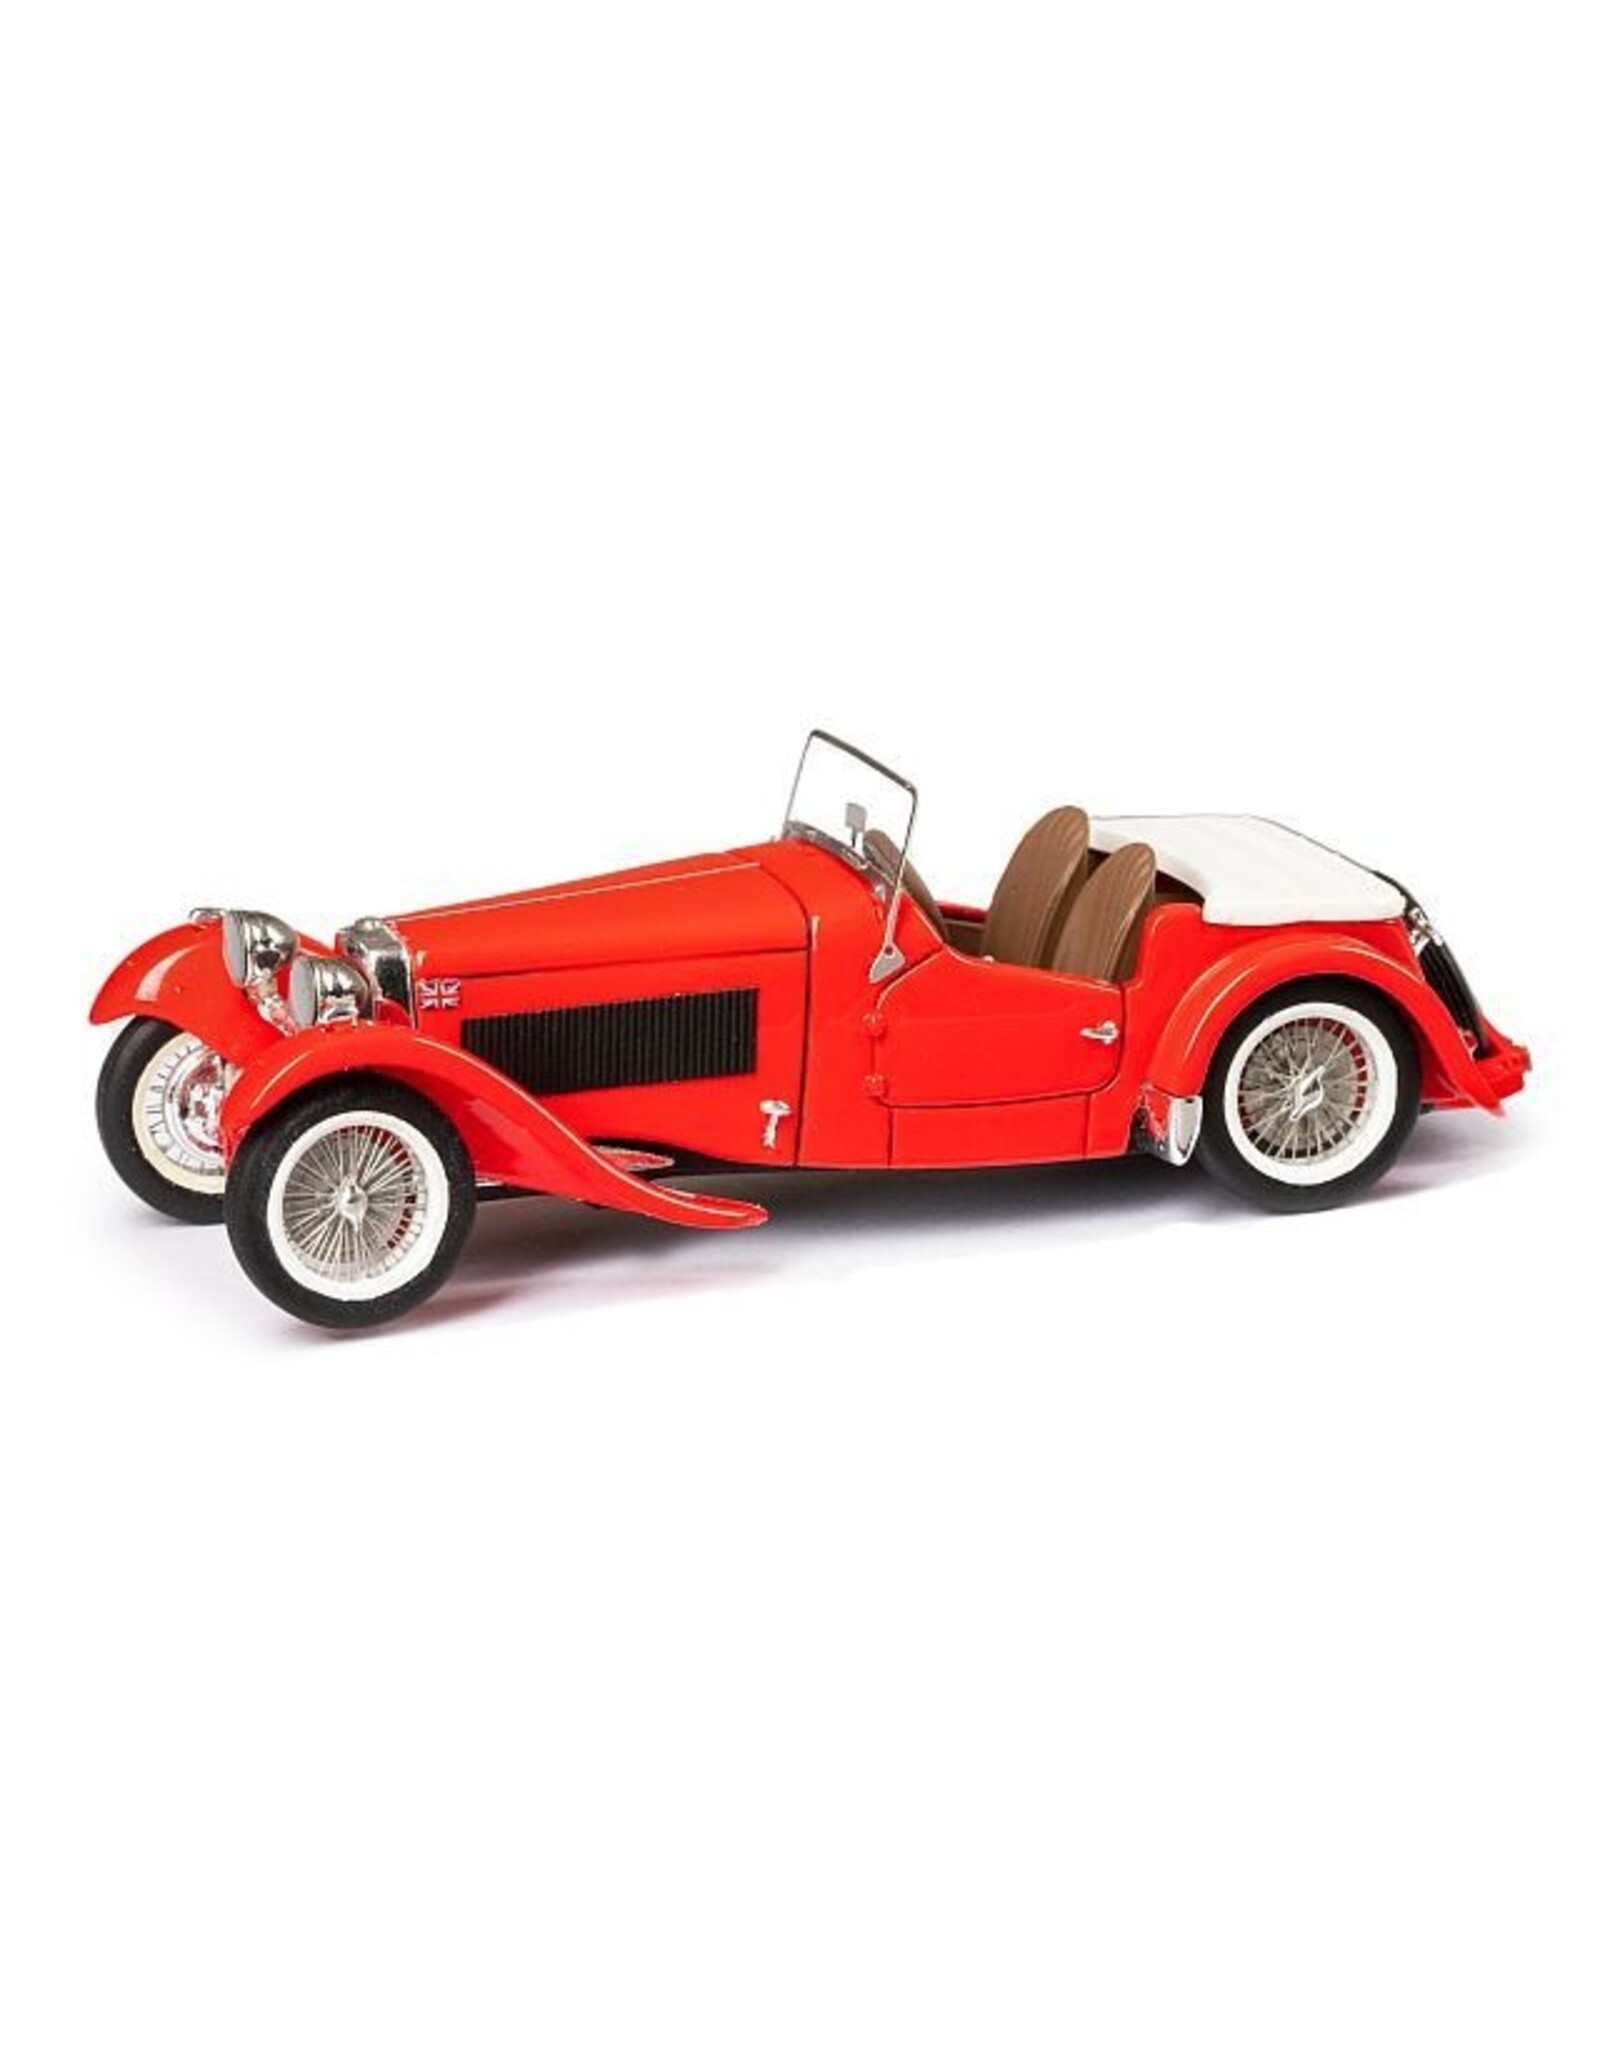 HRG HRG 1500 Sport Roadster(1947)open roof(red)